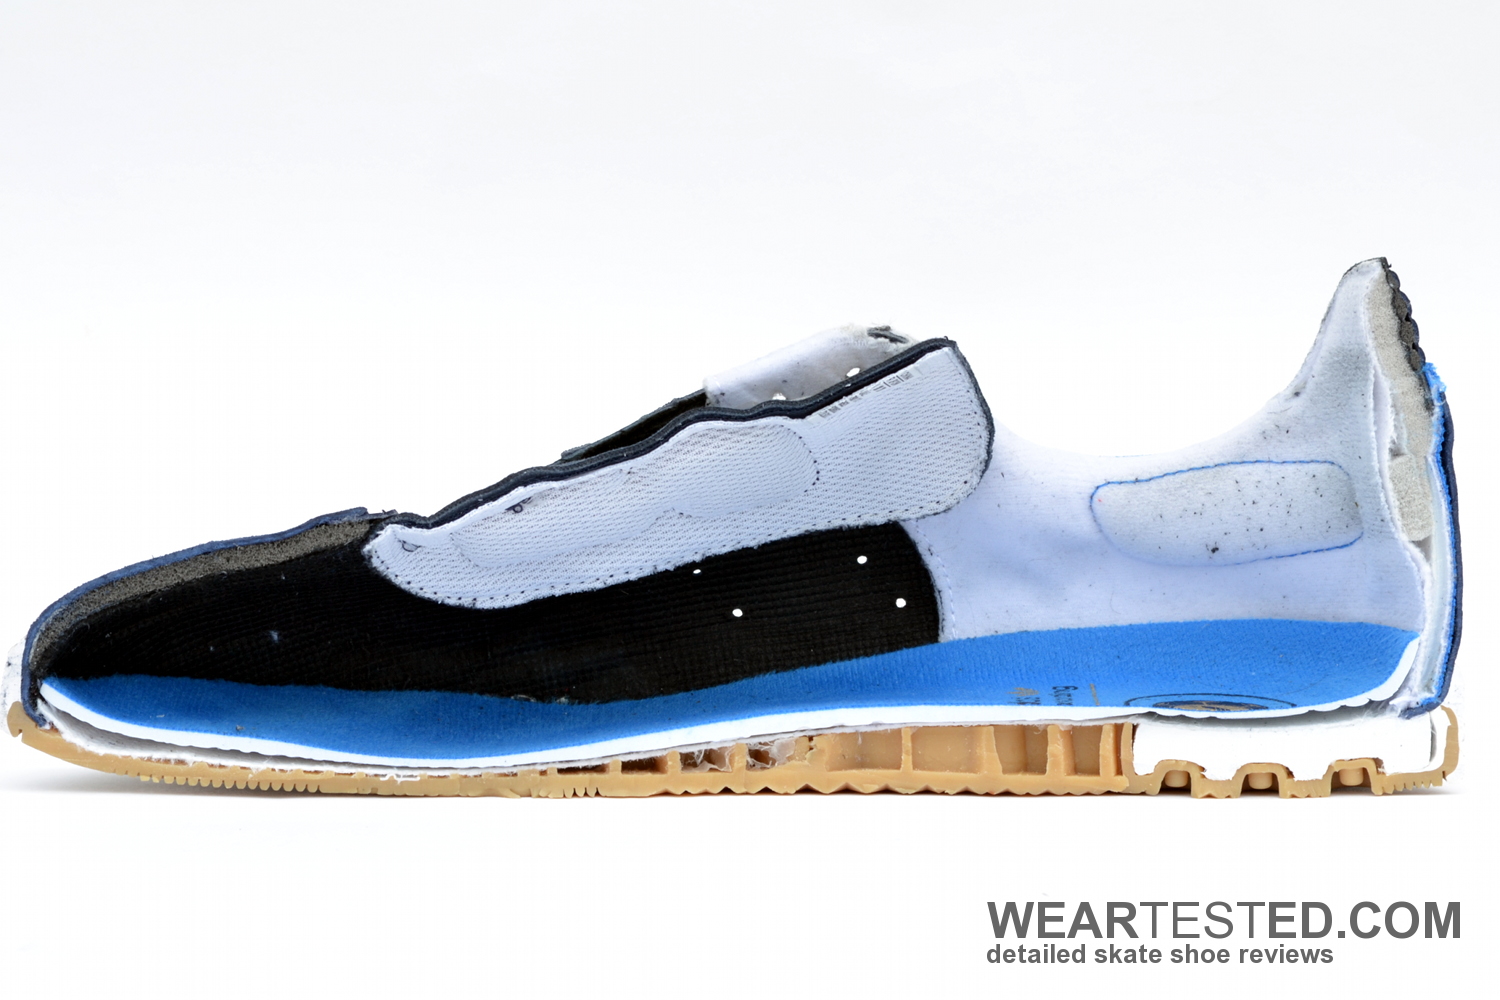 Perceptivo Ingenieros Escultura adidas Busenitz ADV - Weartested - detailed skate shoe reviews